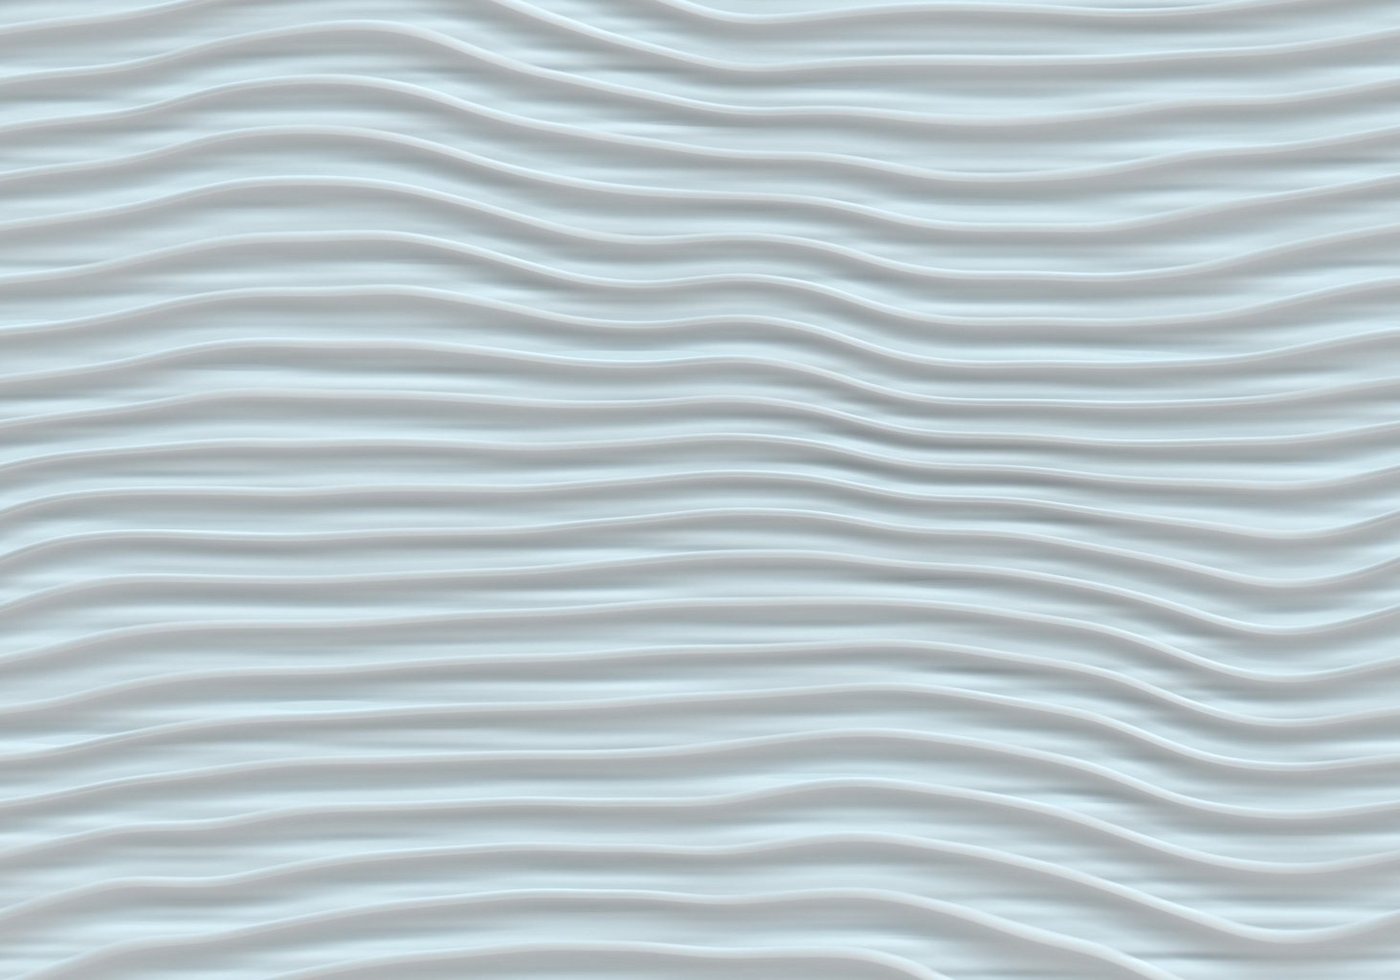 wandmotiv24 Fototapete 3D Abstrakt Wellen, strukturiert, Wandtapete, Motivtapete, matt, Vinyltapete, selbstklebend von wandmotiv24